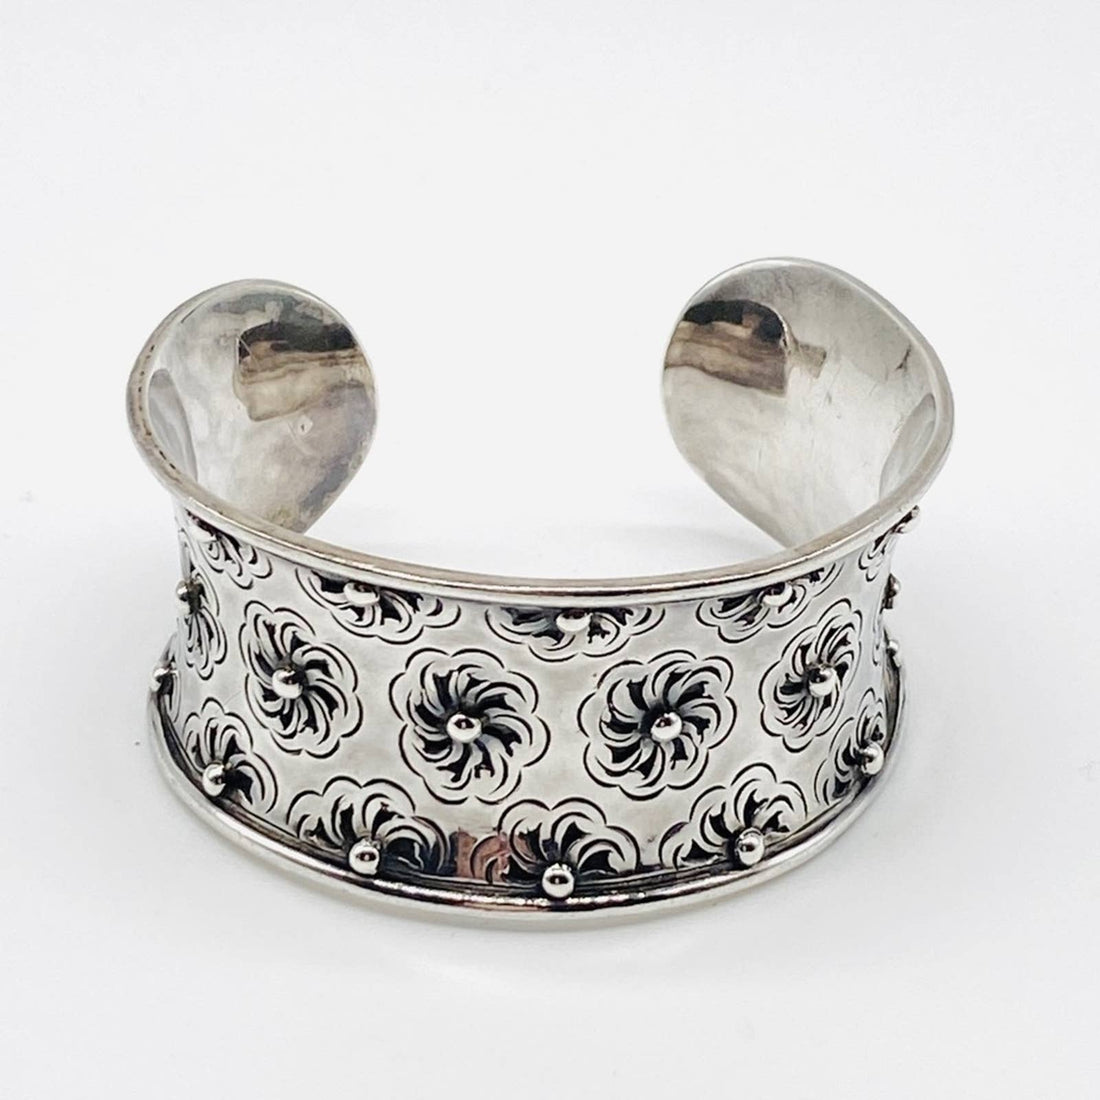 Wide sterling silver cuff bangle bracelet.